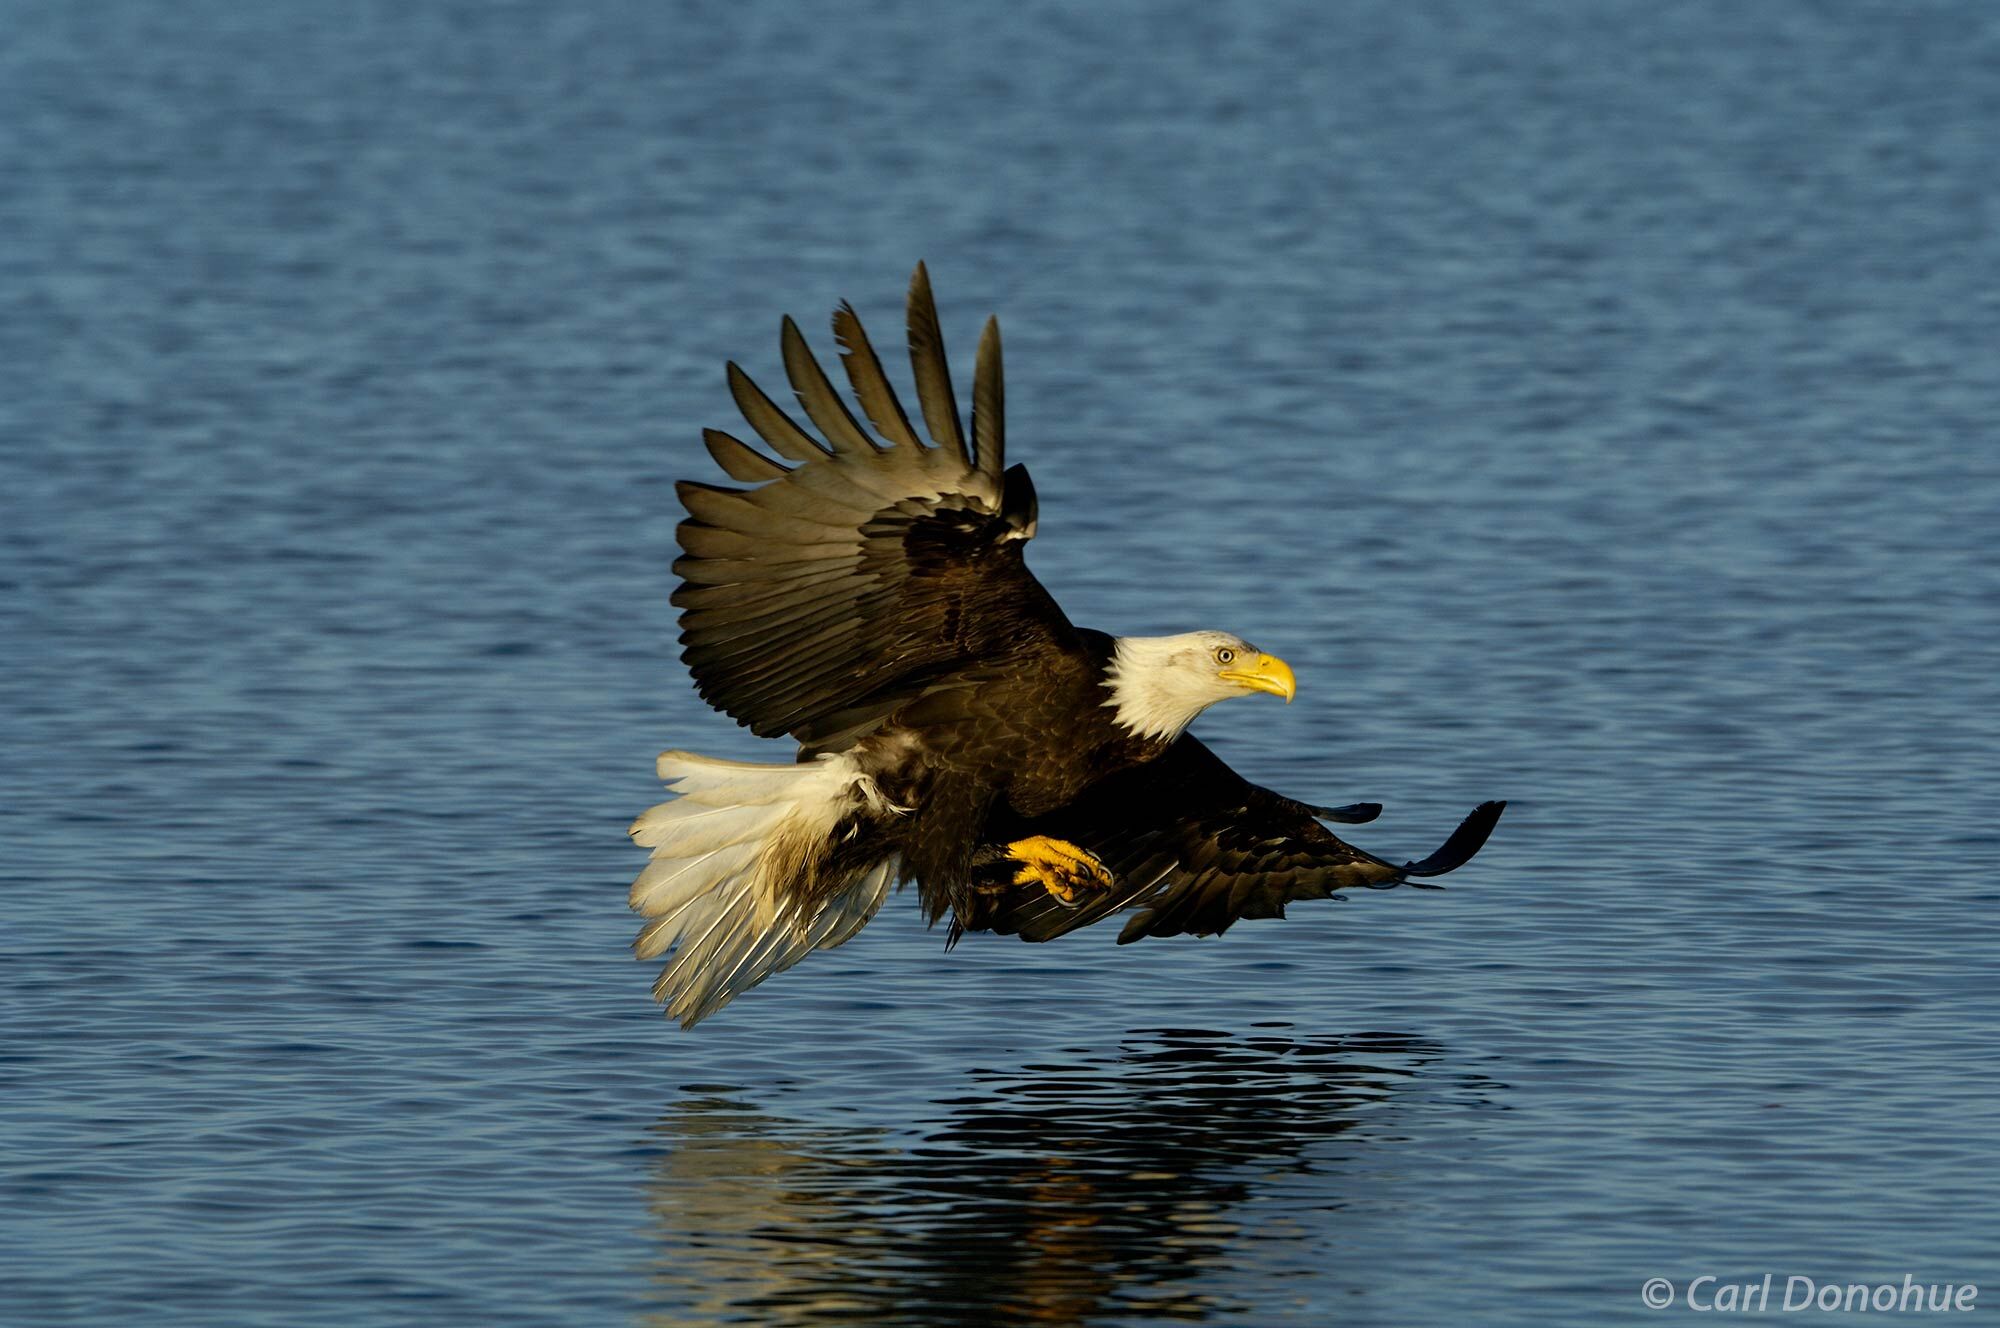 An adult bald eagle flies over the water in search of fish in Kachemak Bay, Alaska. Bald eagle fishing in Kachemak Bay, near...